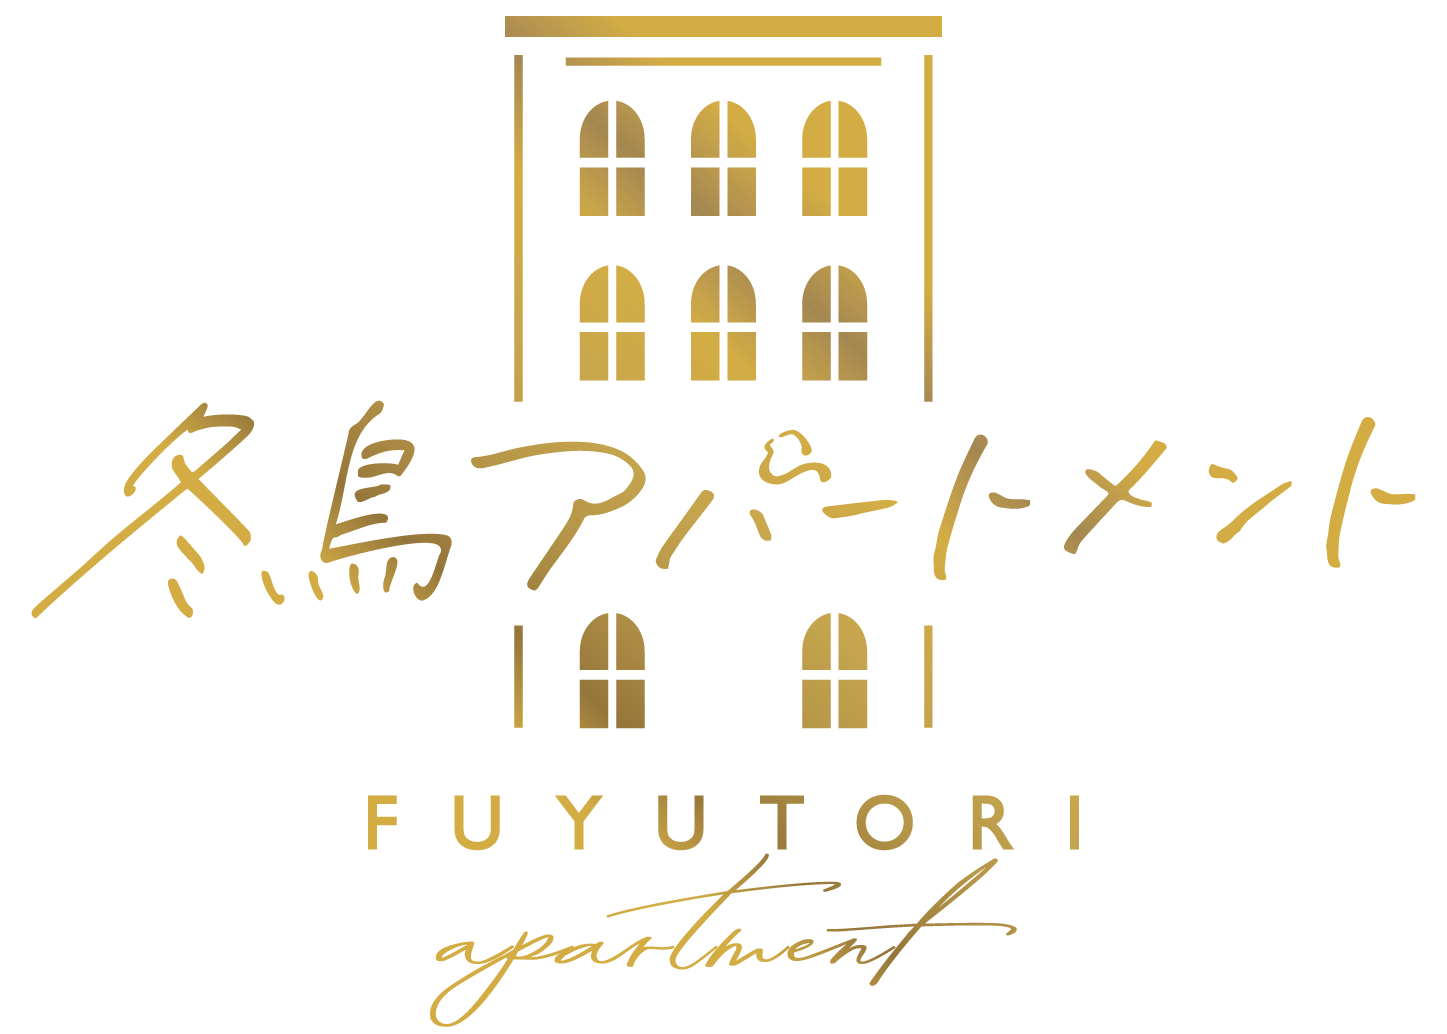 FUYUTORI apartment